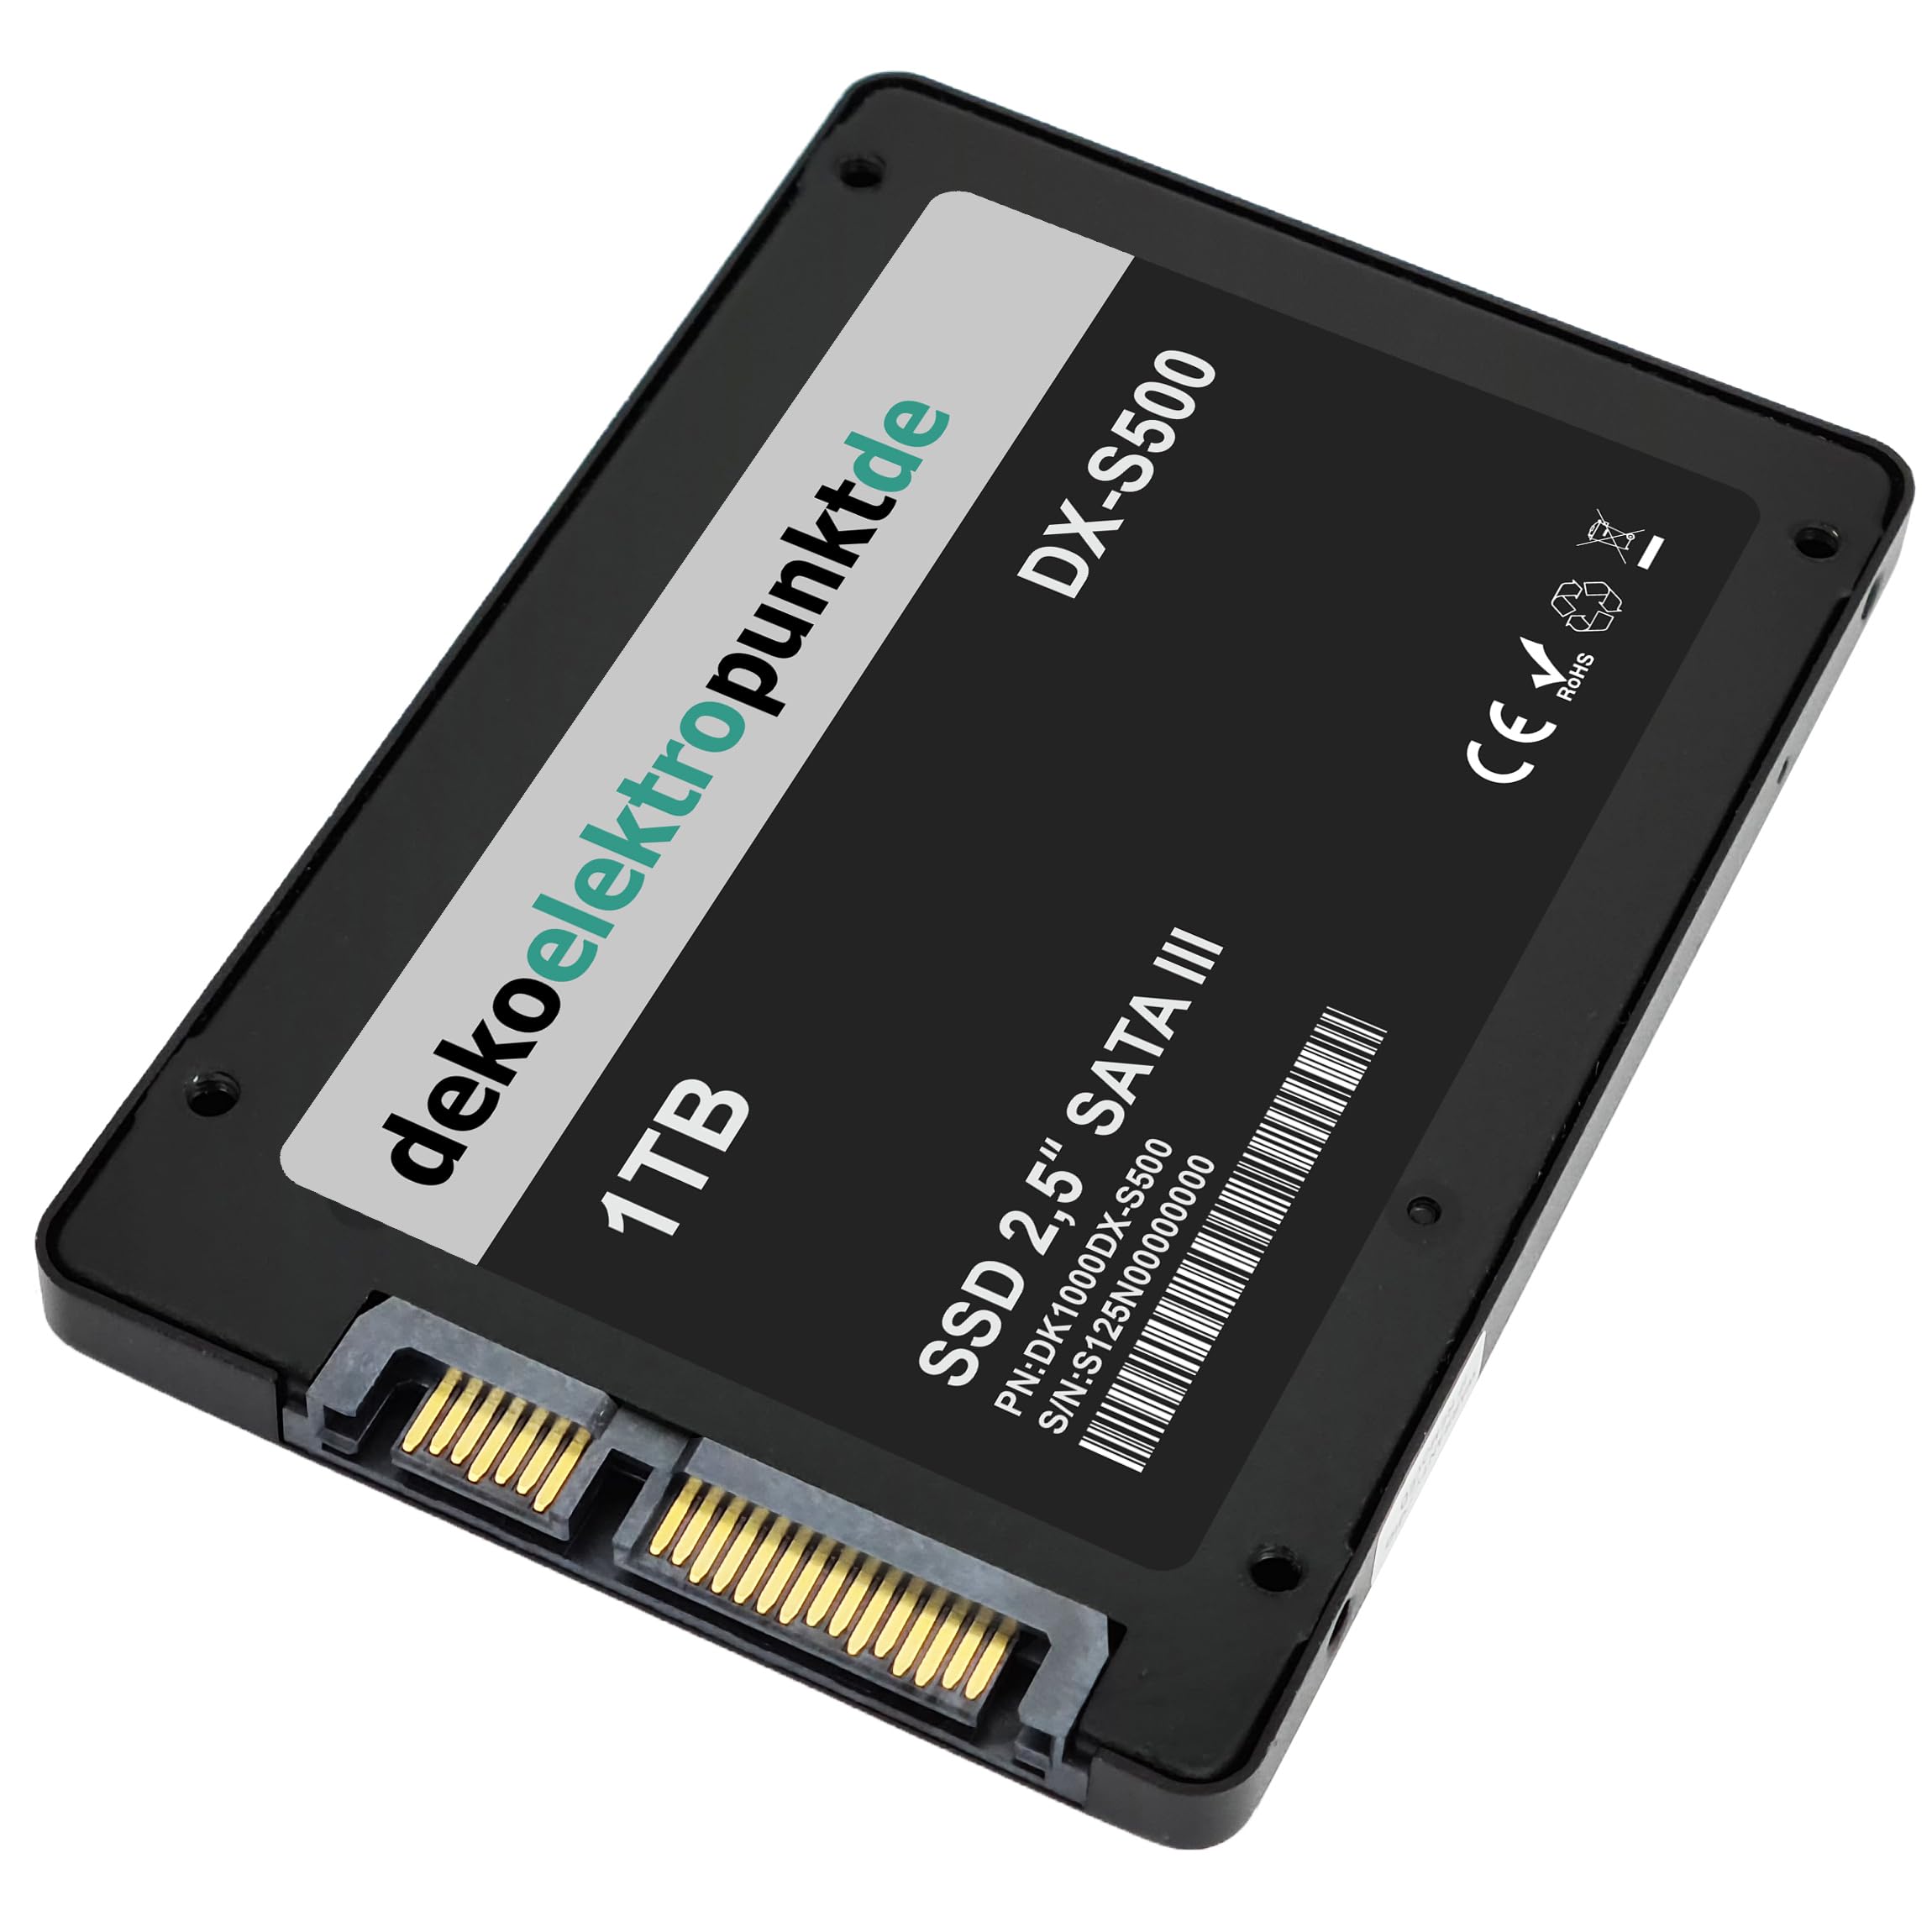 dekoelektropunktde 1TB SSD Festplatte passend für HP TouchSmart tx2-1018, Alternatives Ersatzteil